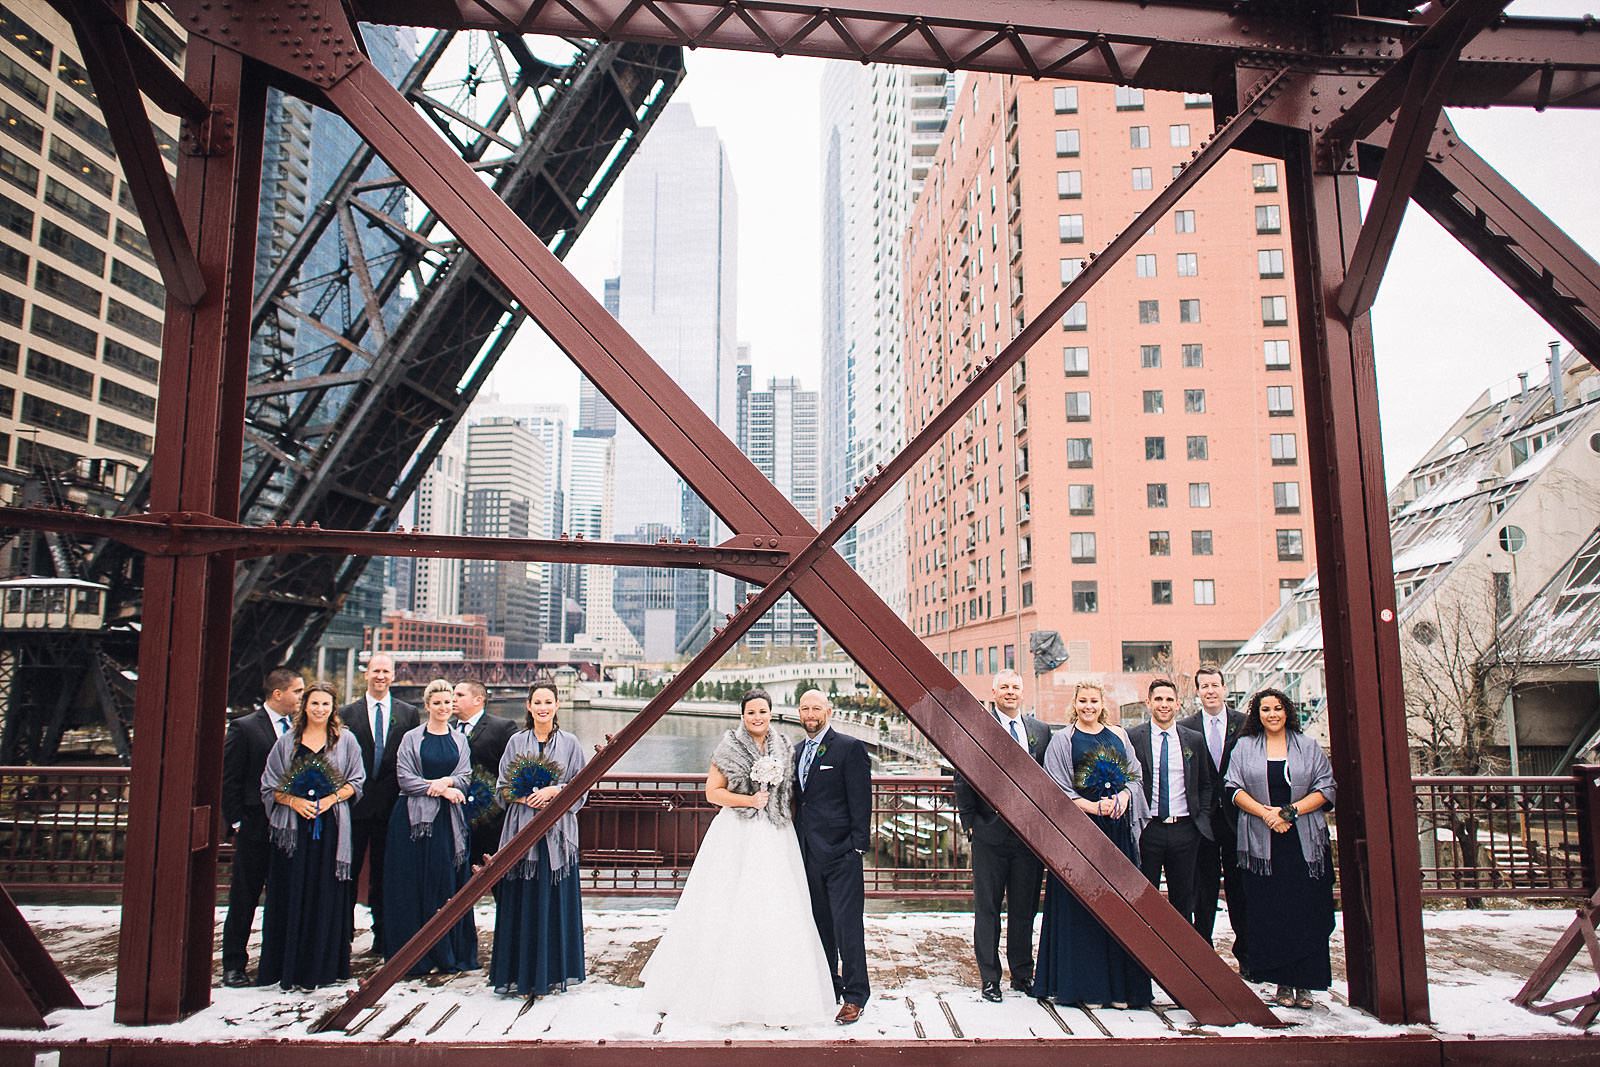 25 kinzie street bridge wedding party photos - Salvatores Chicago Wedding Photos // Jen + Bob